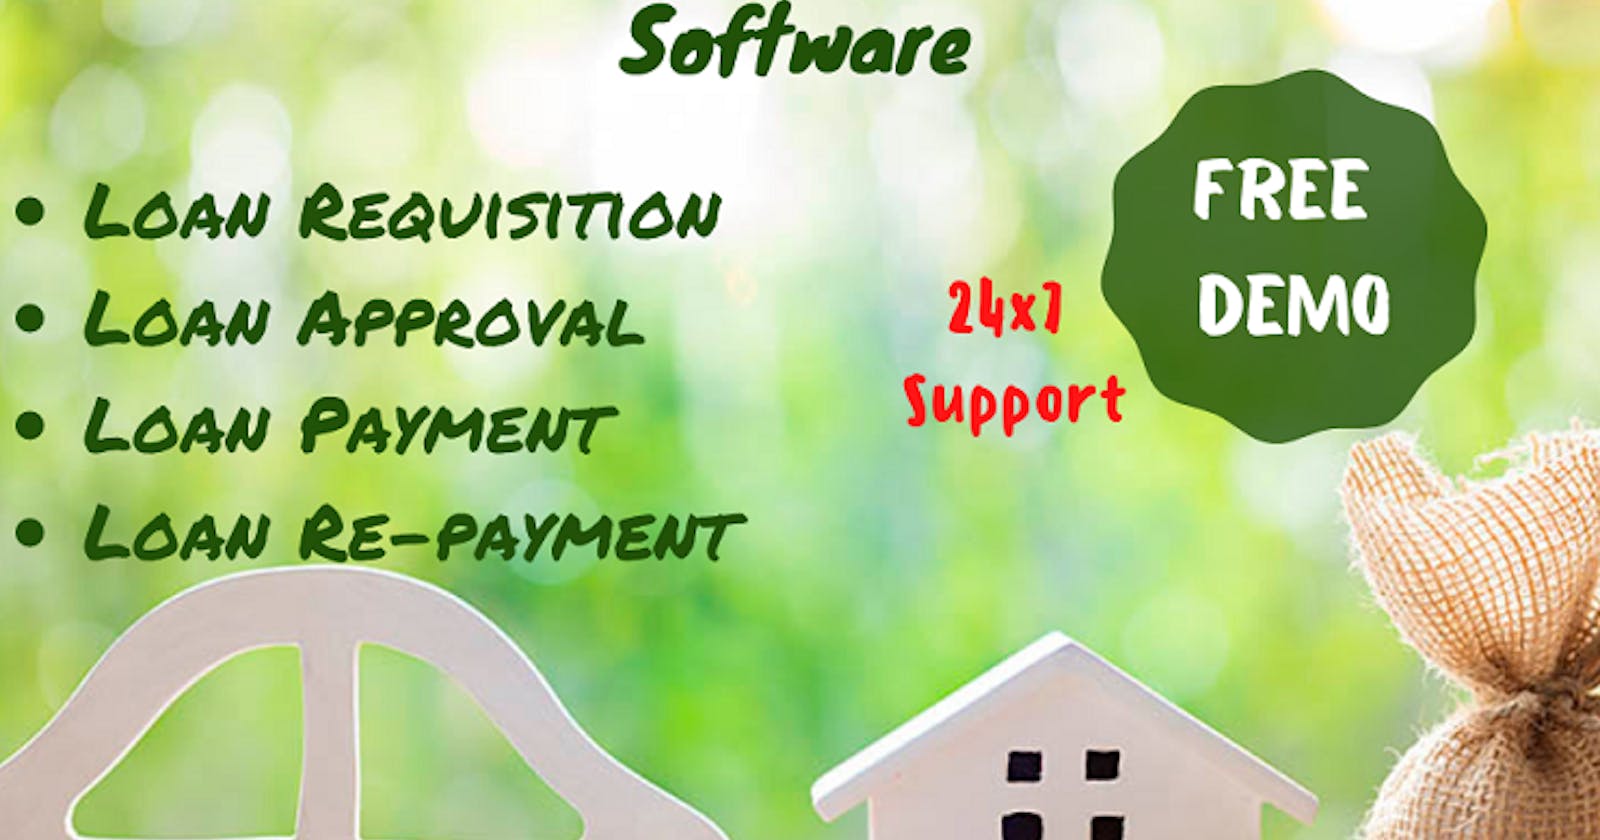 Online Microfinance Software - Free Demo & Download